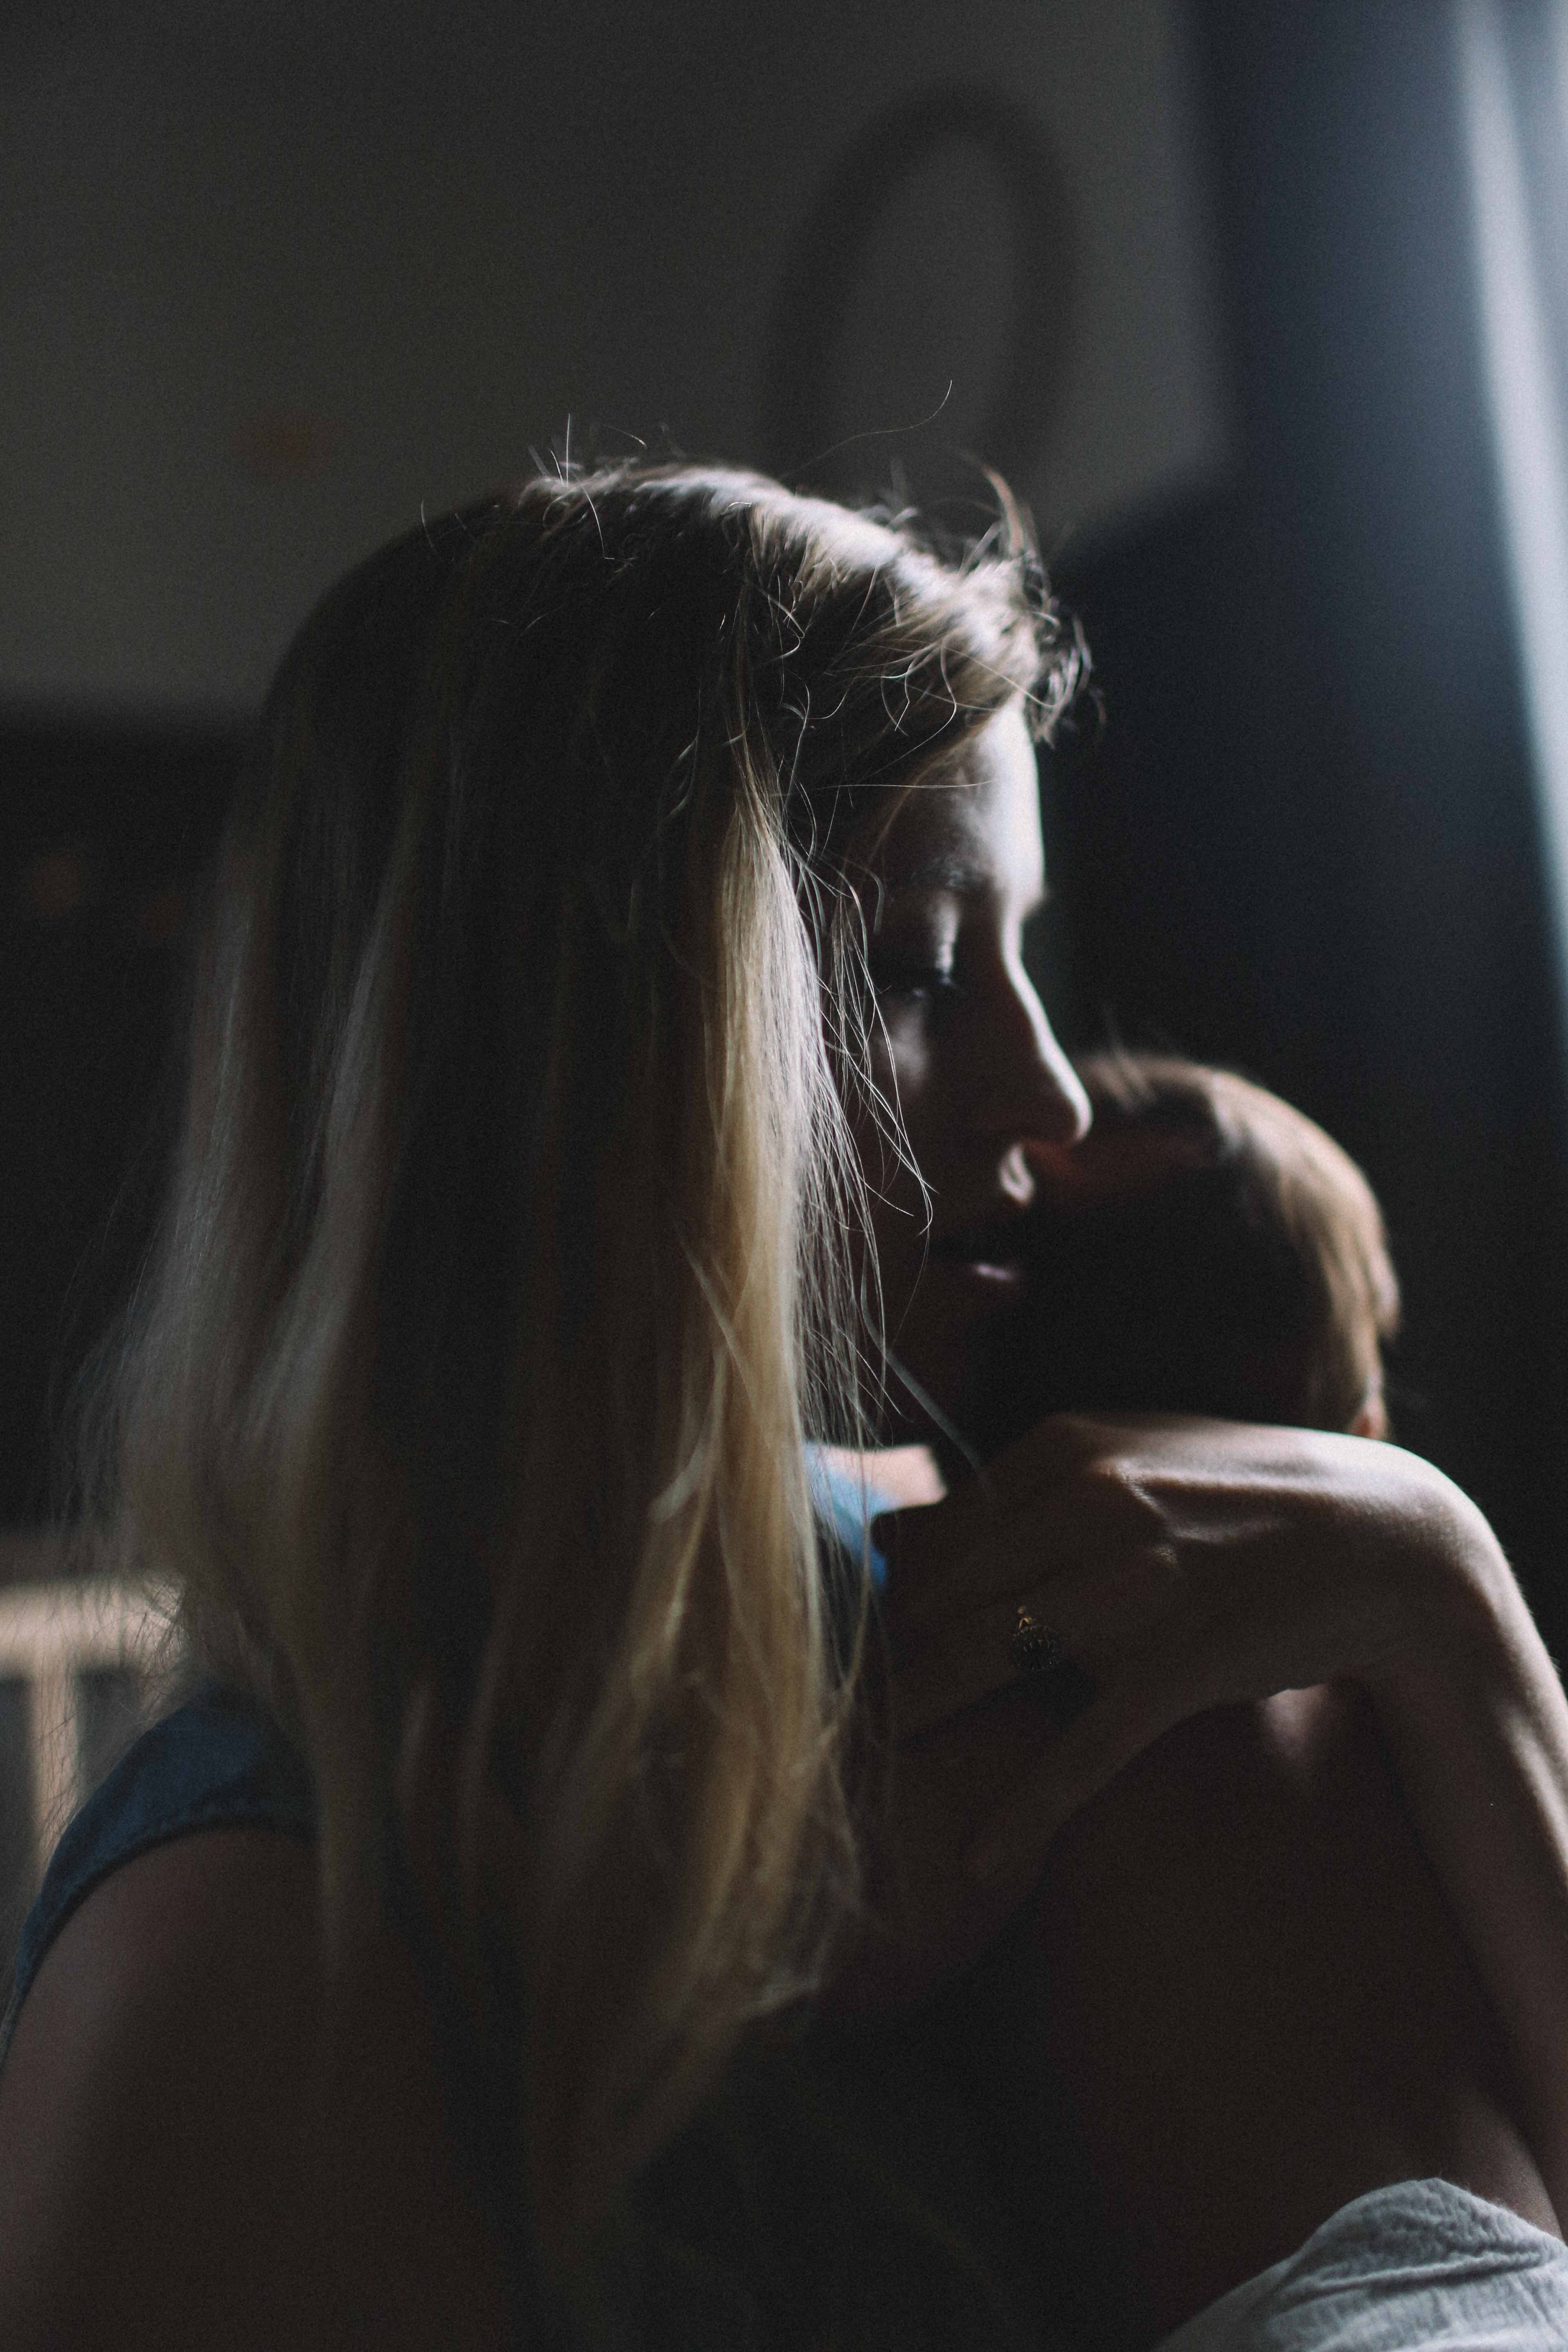 A young mum cuddling her newborn | Photo by Jenna Norman on Unsplash